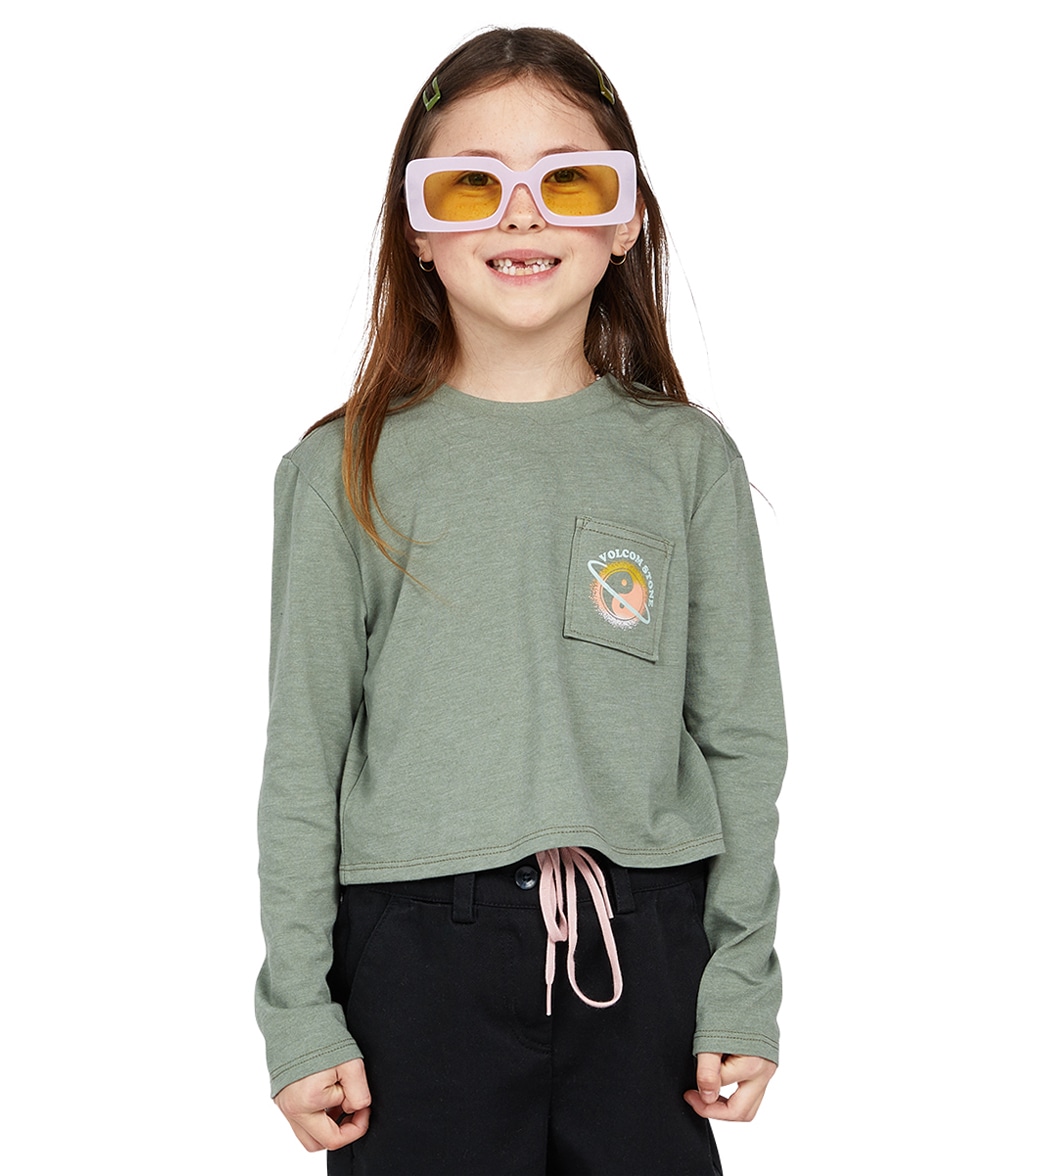 Volcom Girls' Pocket Dial Long Sleeve Tee Shirt Big Kid - Light Army Large Cotton/Polyester - Swimoutlet.com